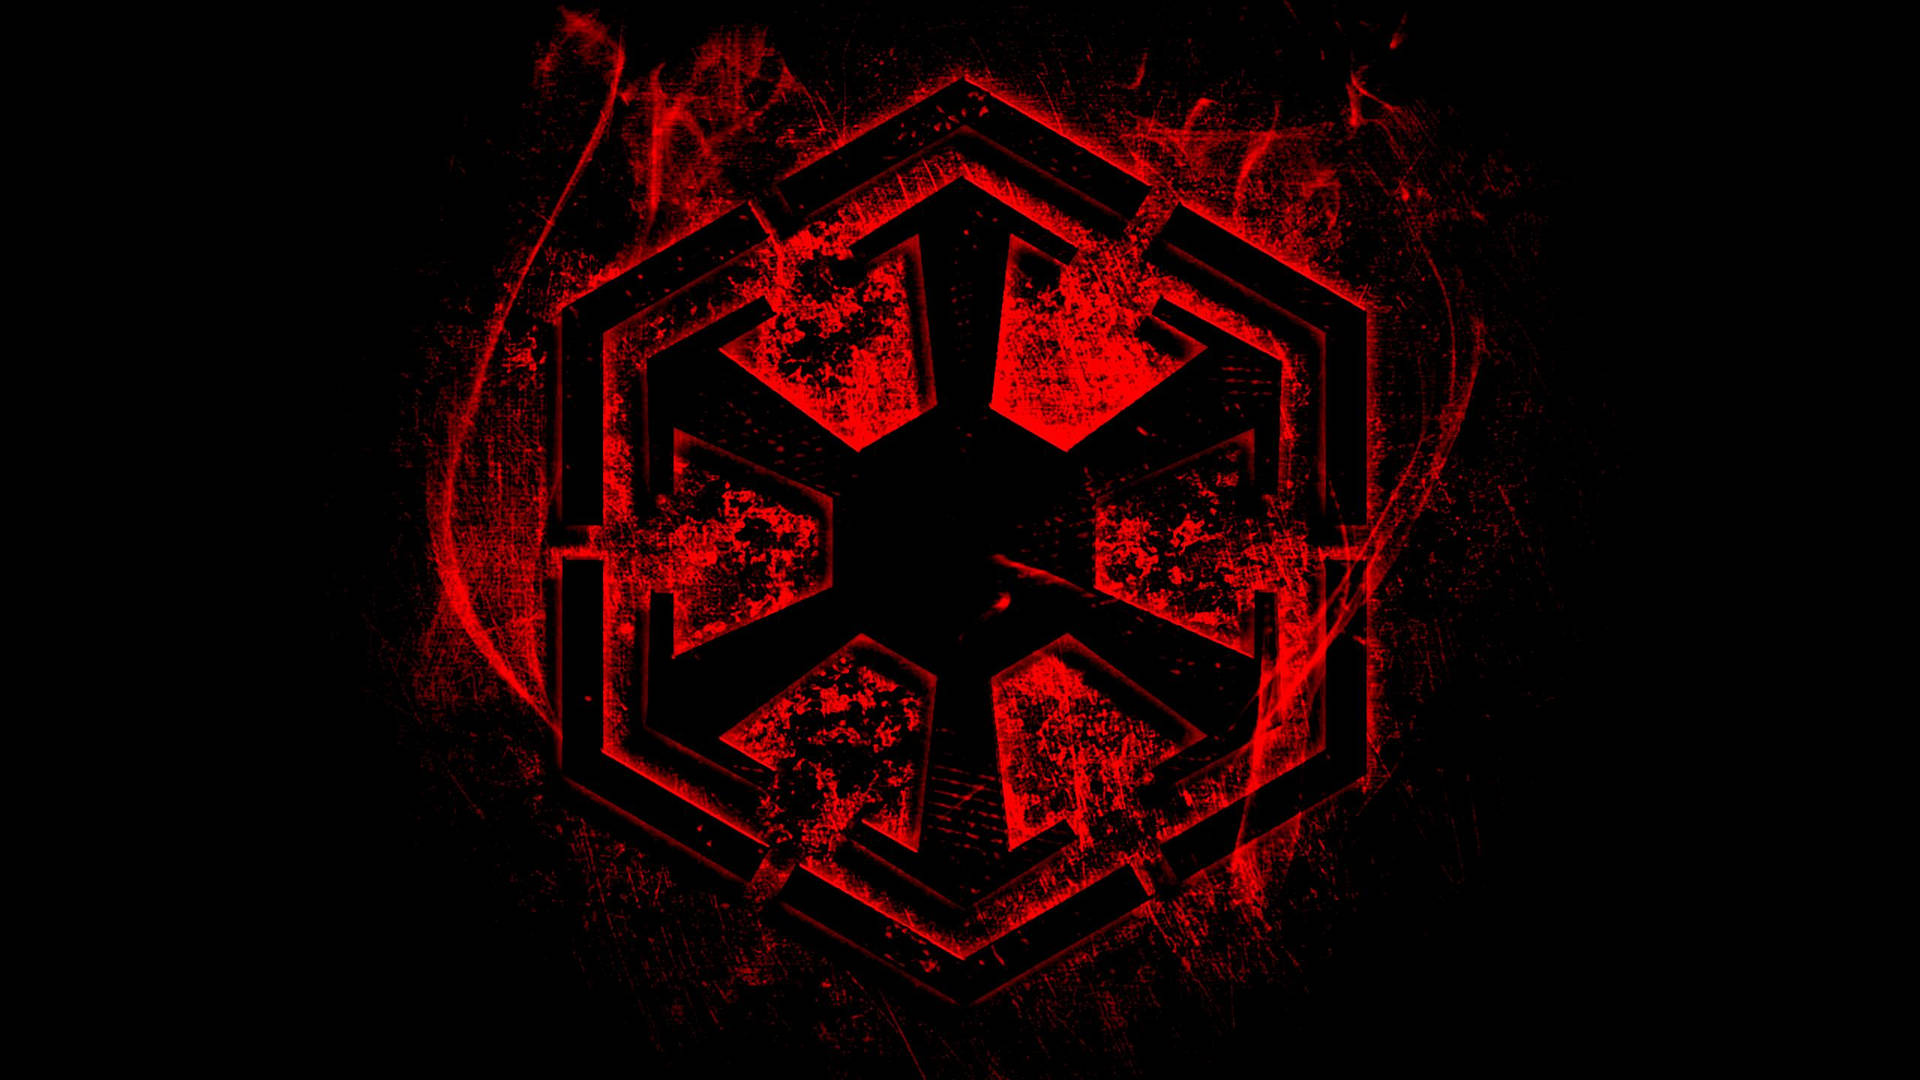 Star Wars Red Sith Empire Logo Wallpaper